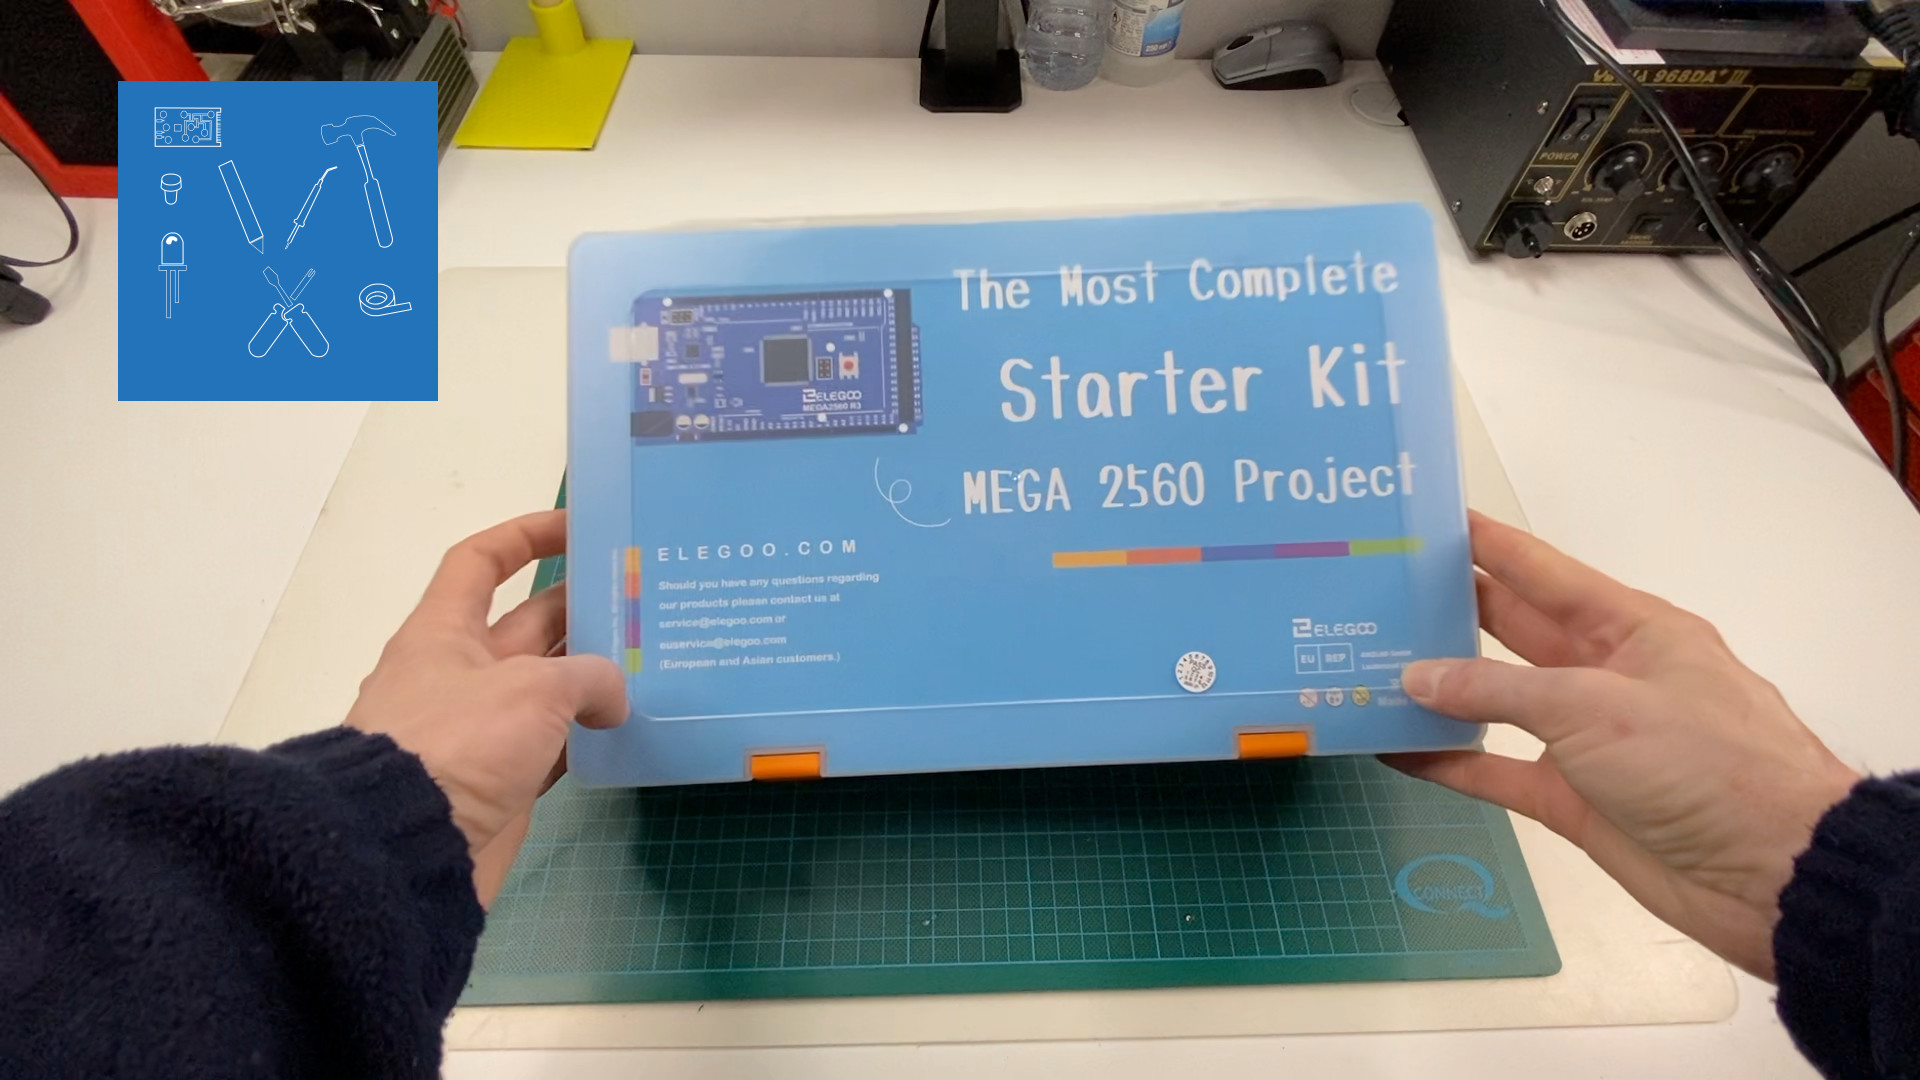 ELEGOO Mega 2560 The Most Complete Starter Kit